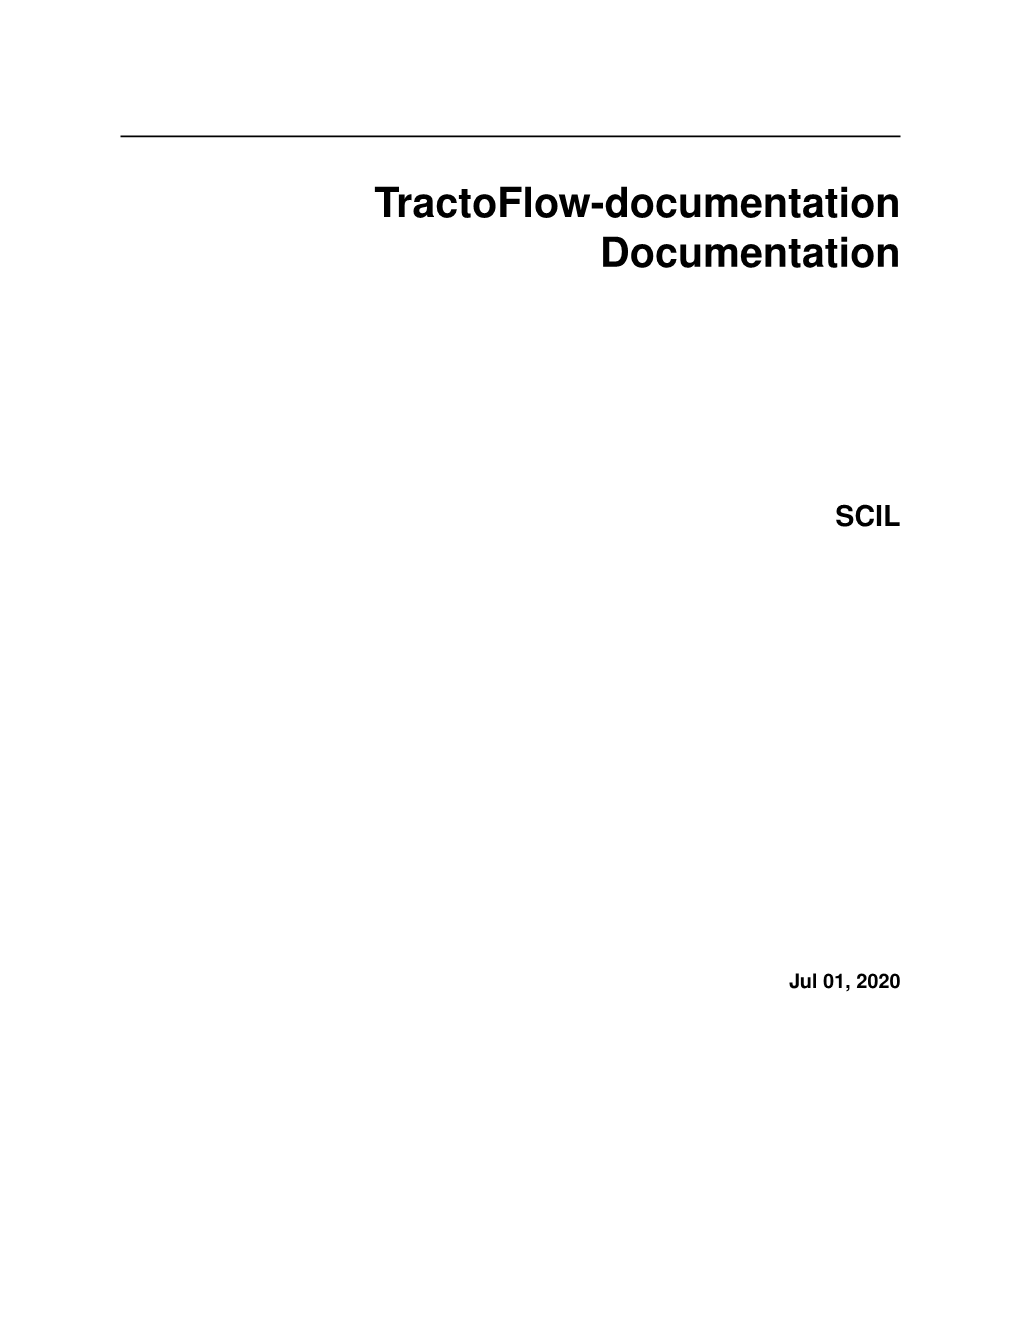 Tractoflow-Documentation Documentation